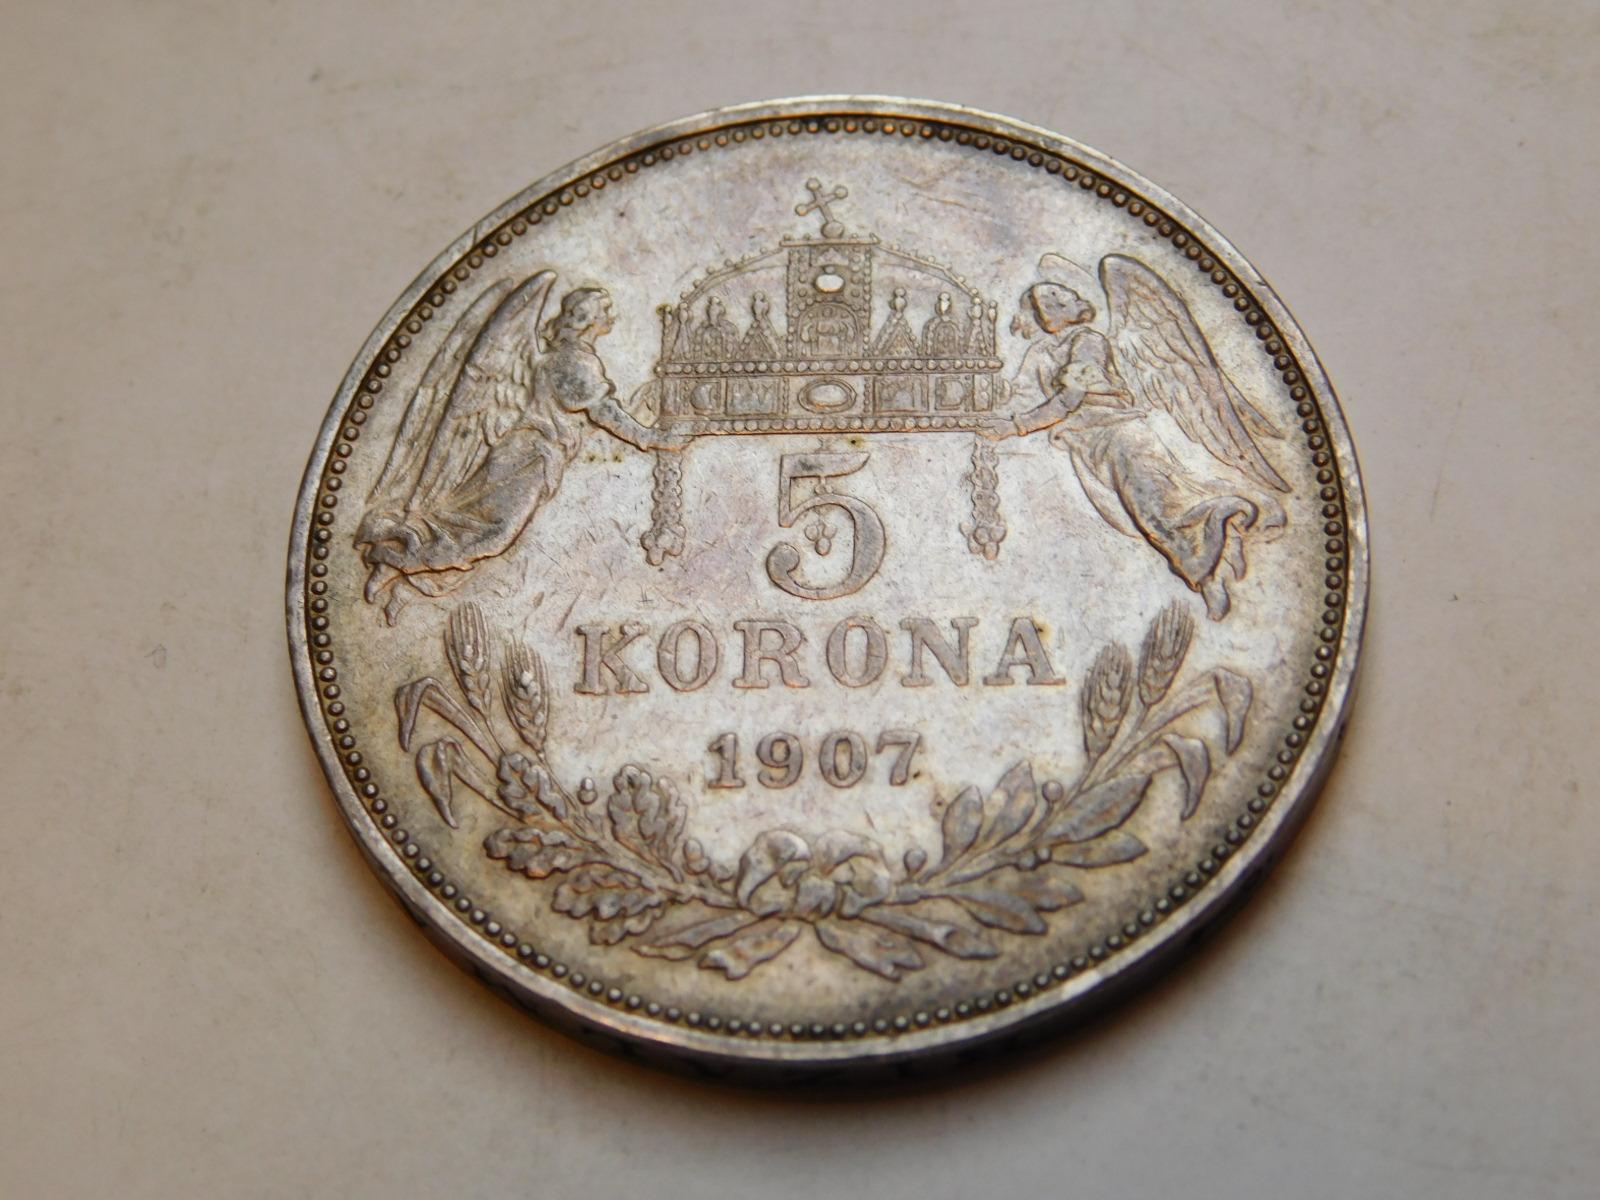 5 korona 1907kb - velmi pekny stav, vzacnejsi rocnik! - Numismatika